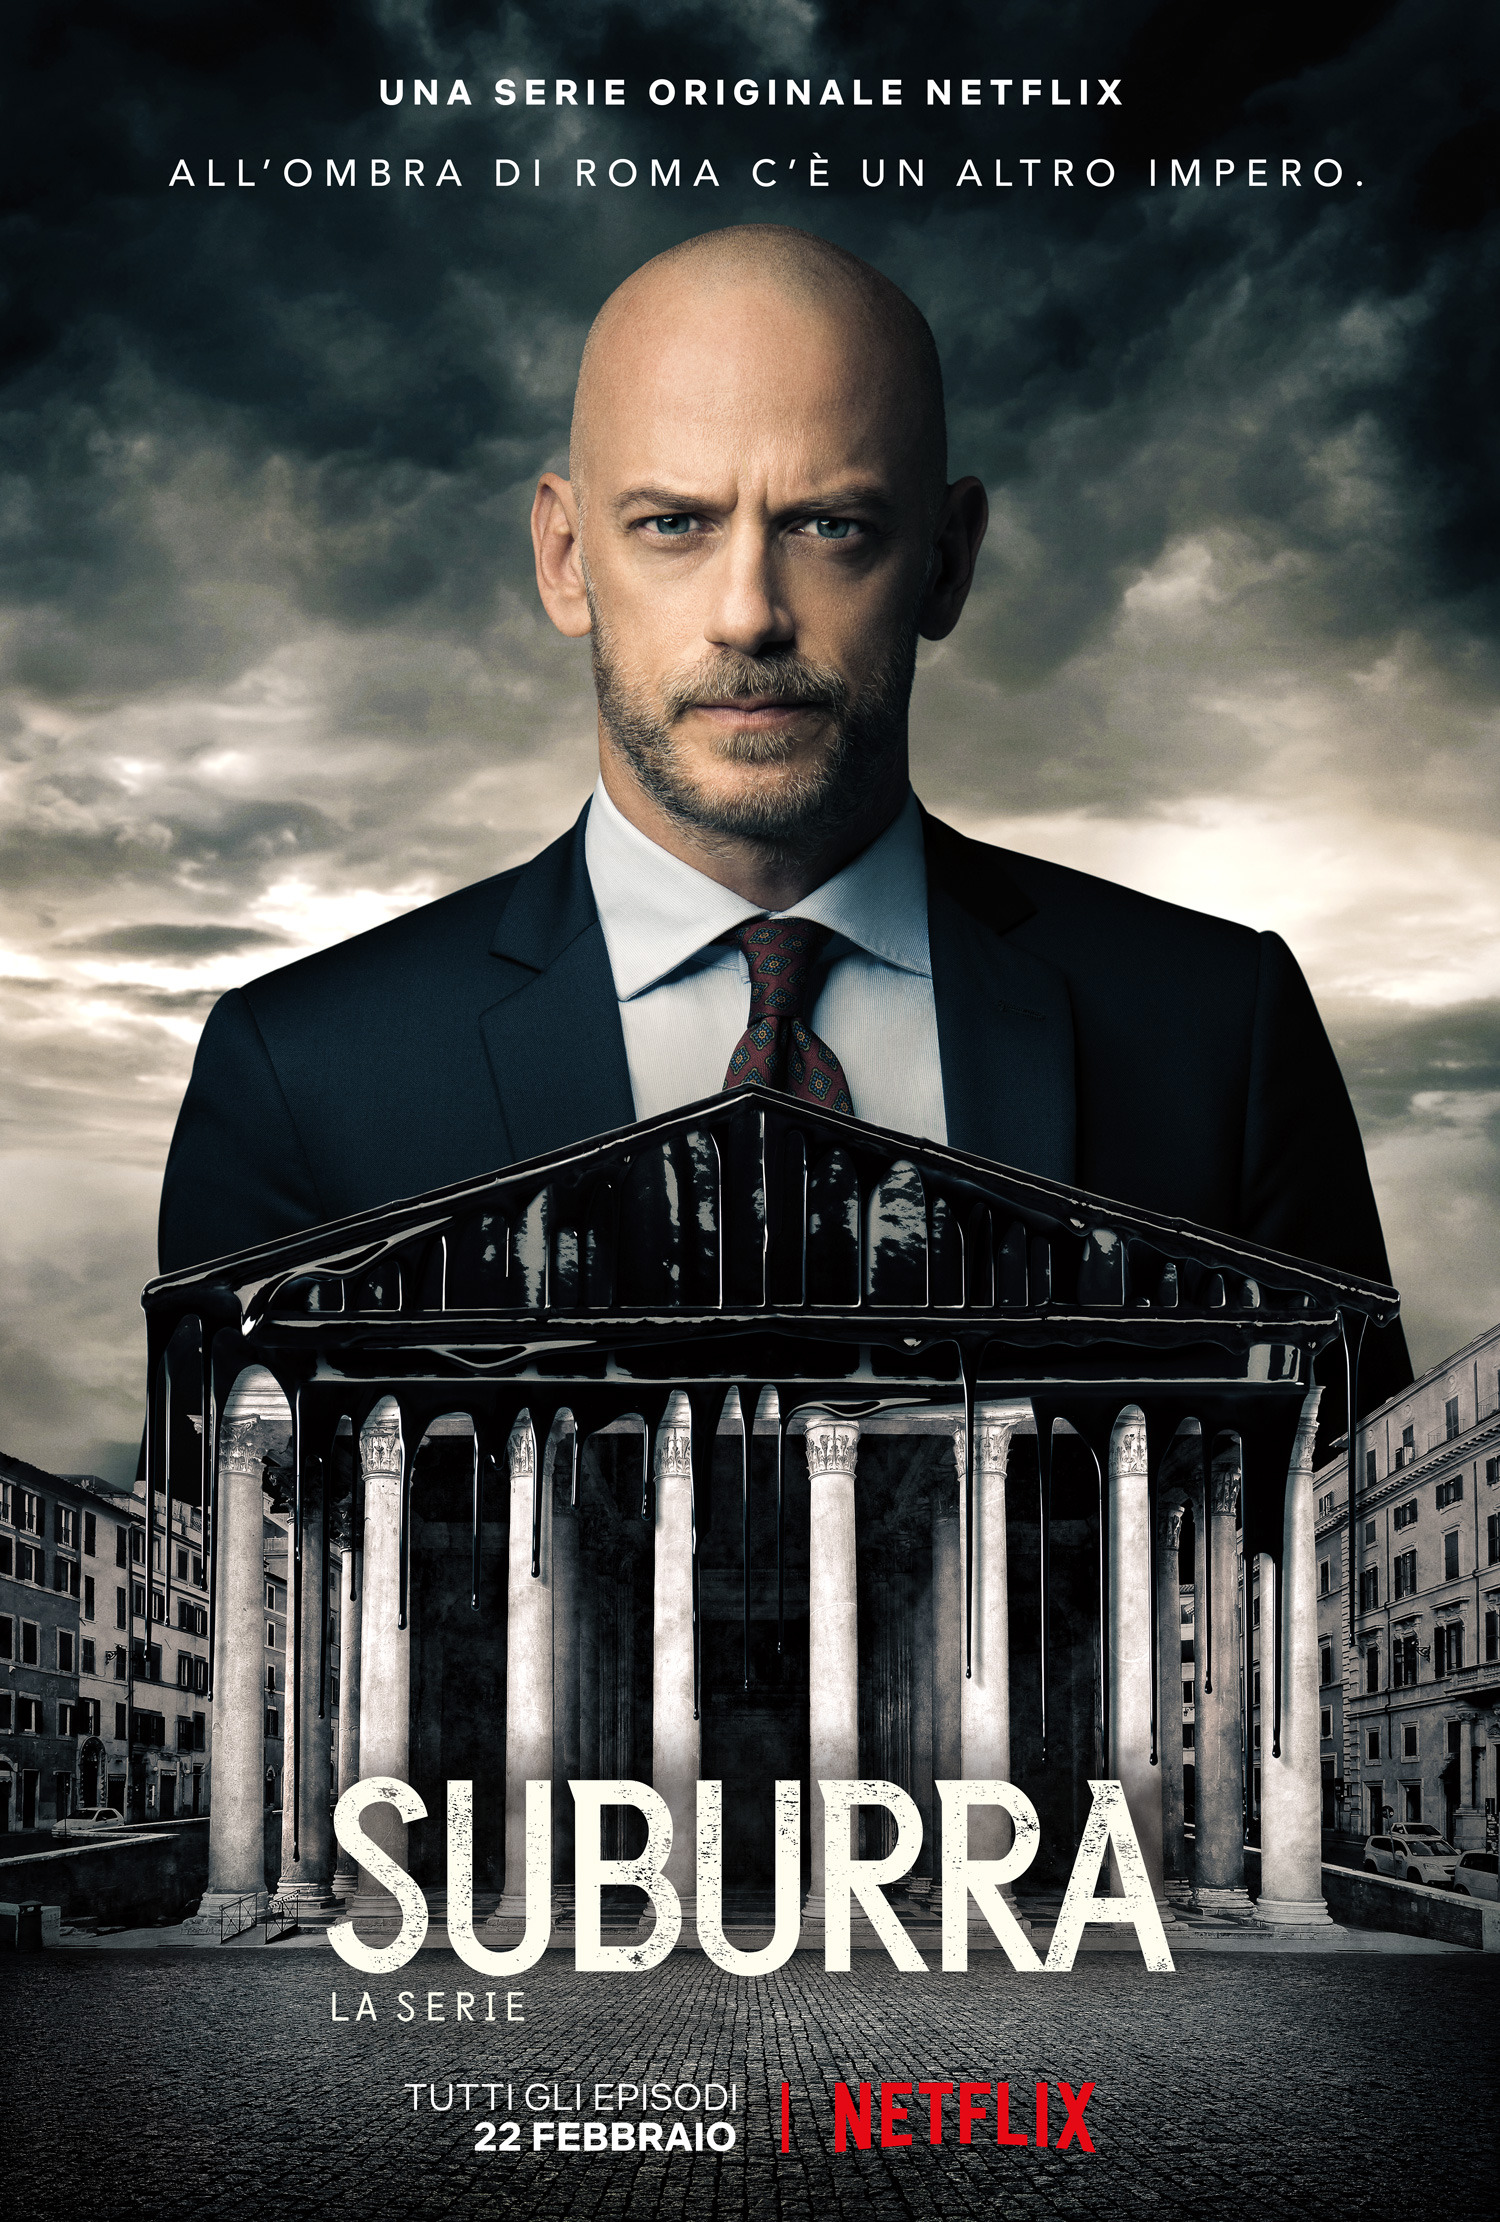 Mega Sized TV Poster Image for Suburra: la serie (#6 of 12)